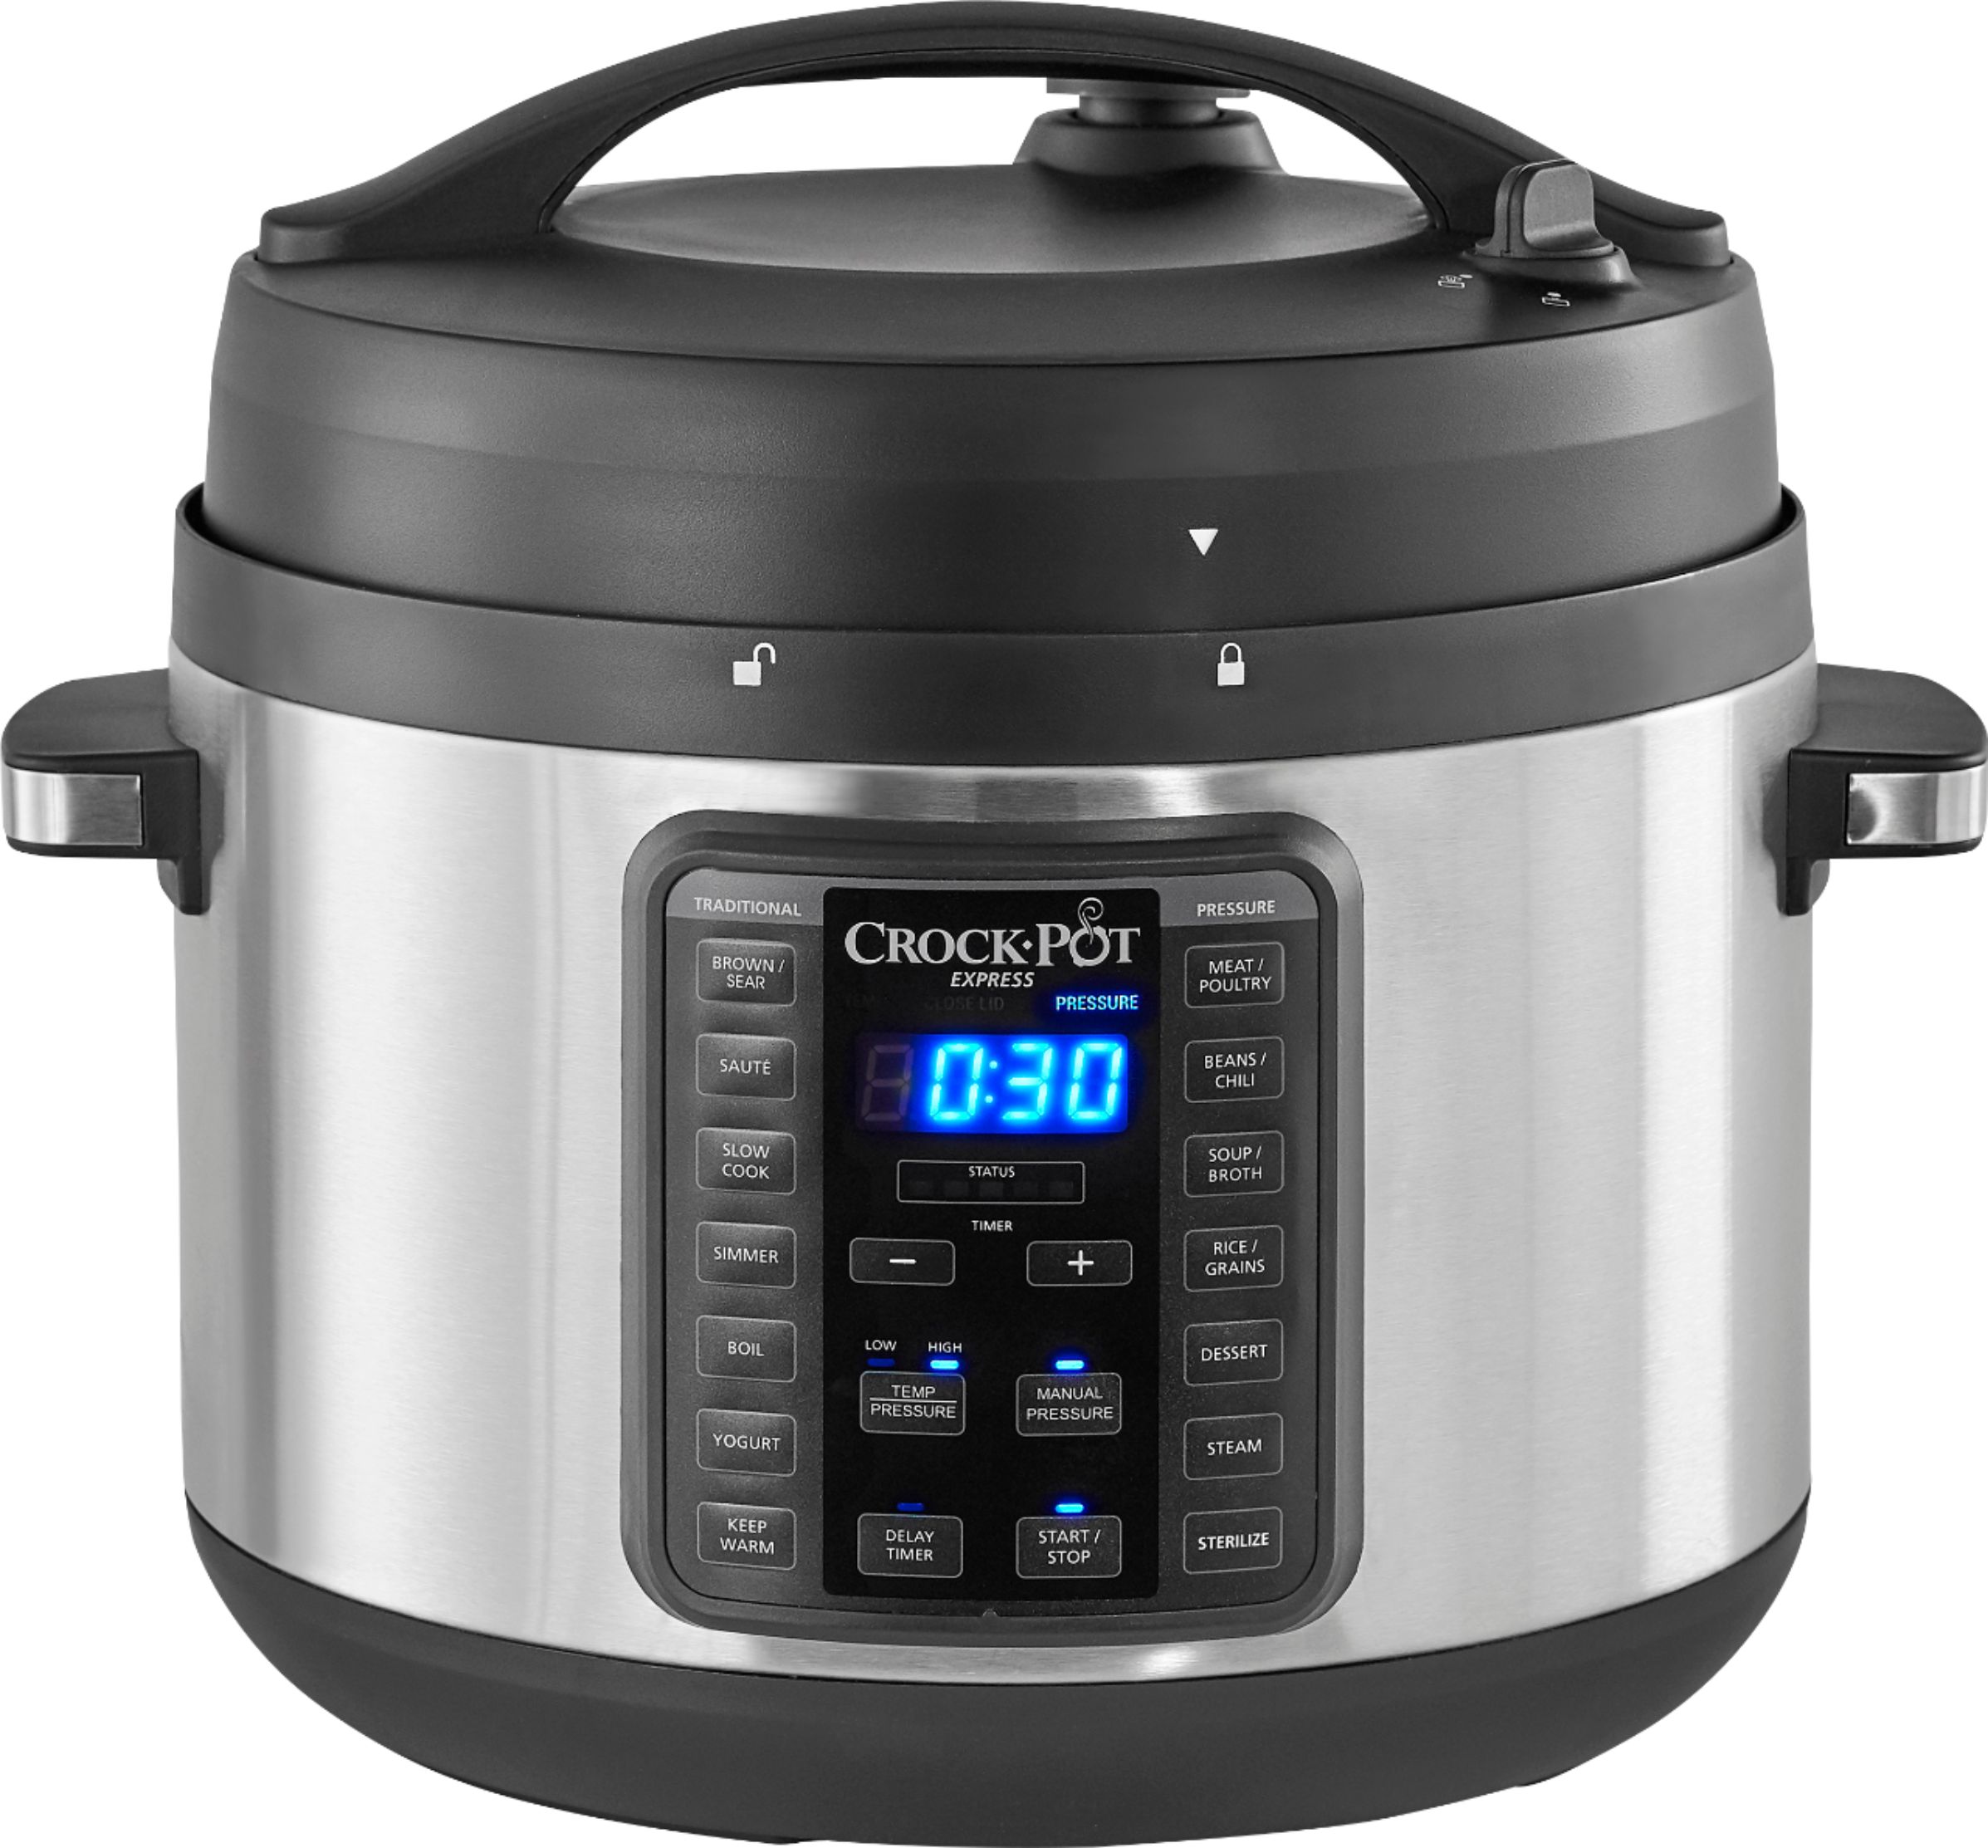 Crock-Pot 10qt Digital Multi Cooker - Stainless Steel $60